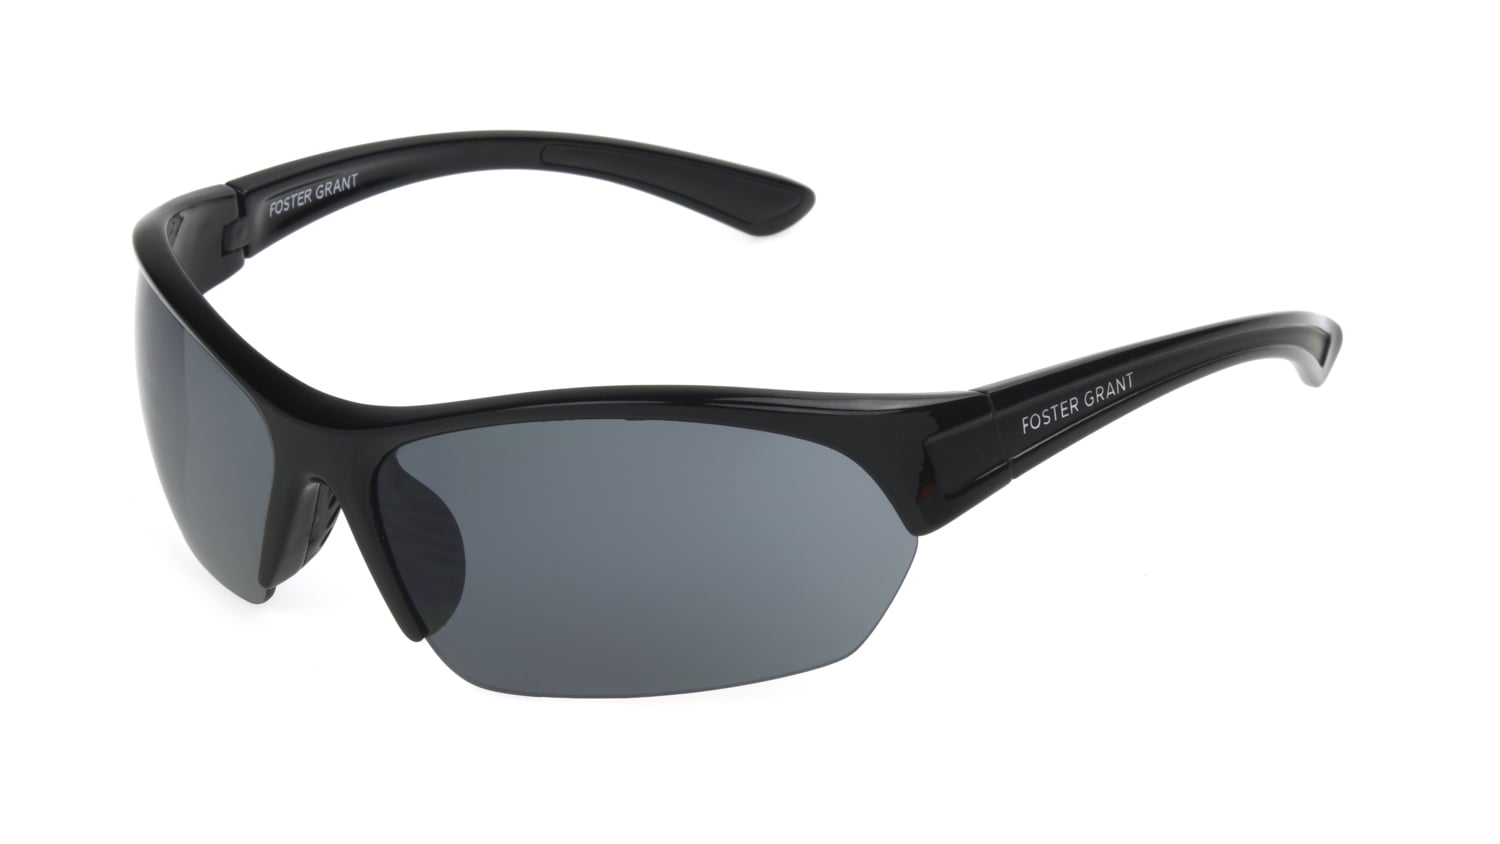 Foster Grant Men's Black Blade Sunglasses SS08 - Walmart.com